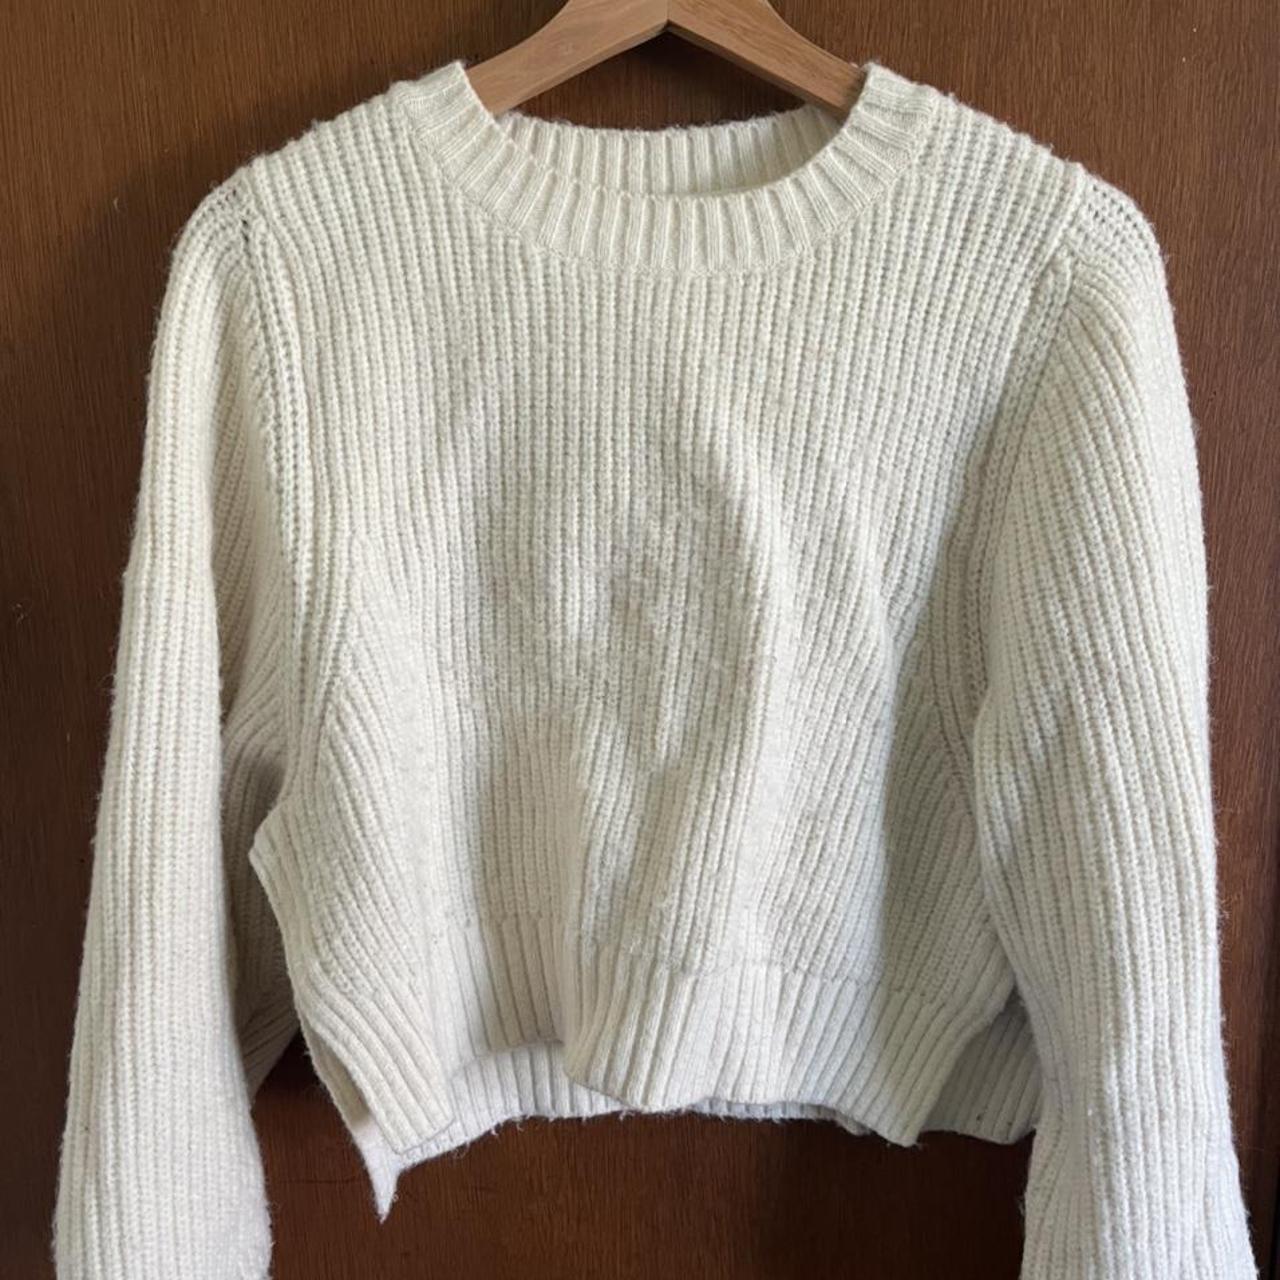 super cute cream knitted jumper, size 10 and true to... - Depop